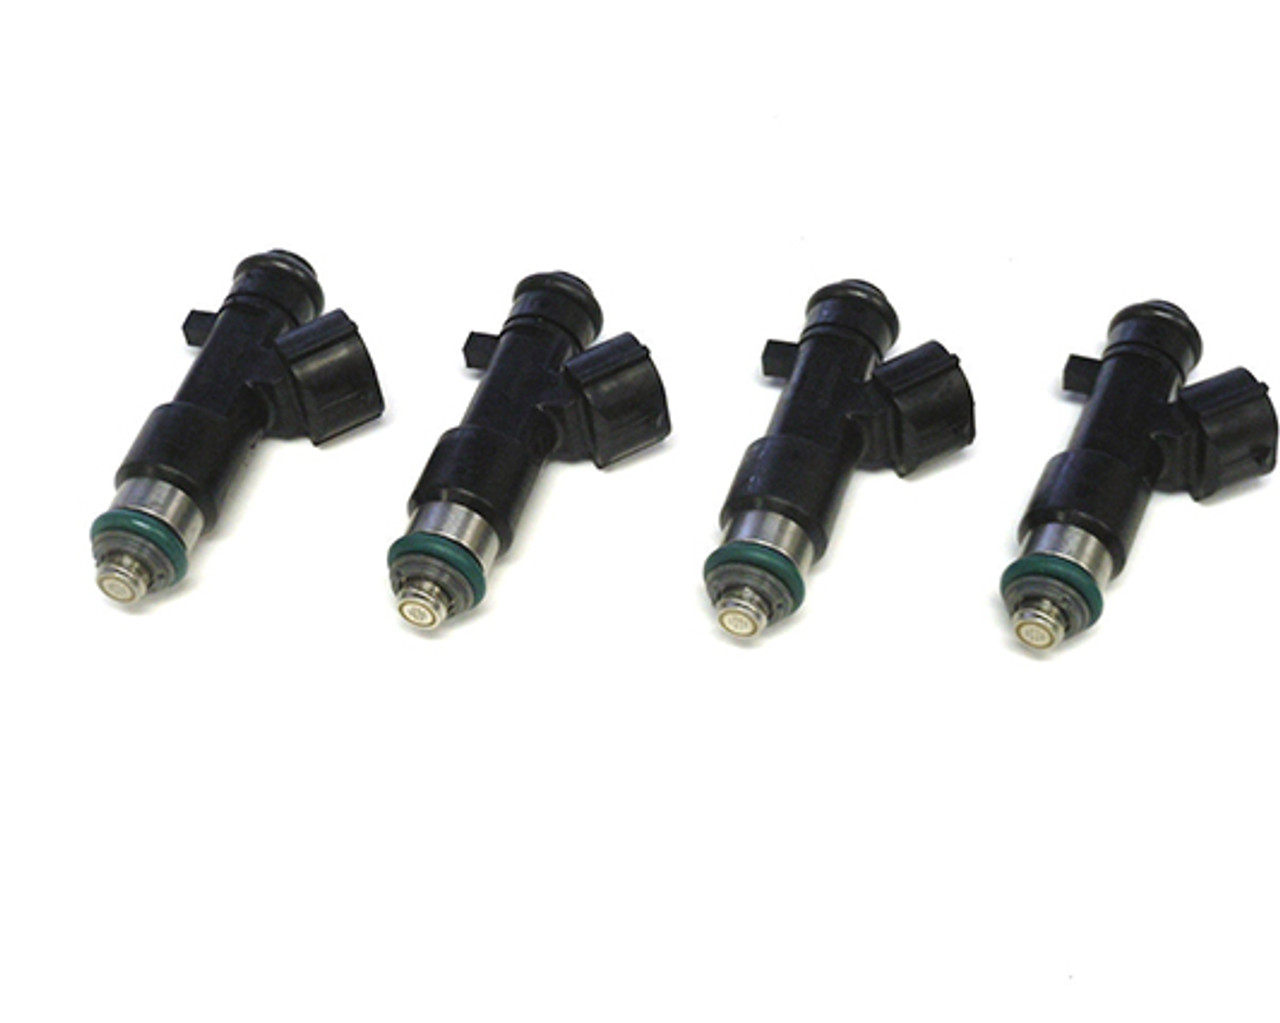 Deatschwerks DW 600cc Fuel Injectors for K & F Series Motors - k20 k24 f22c  (21U-01-0600-4)